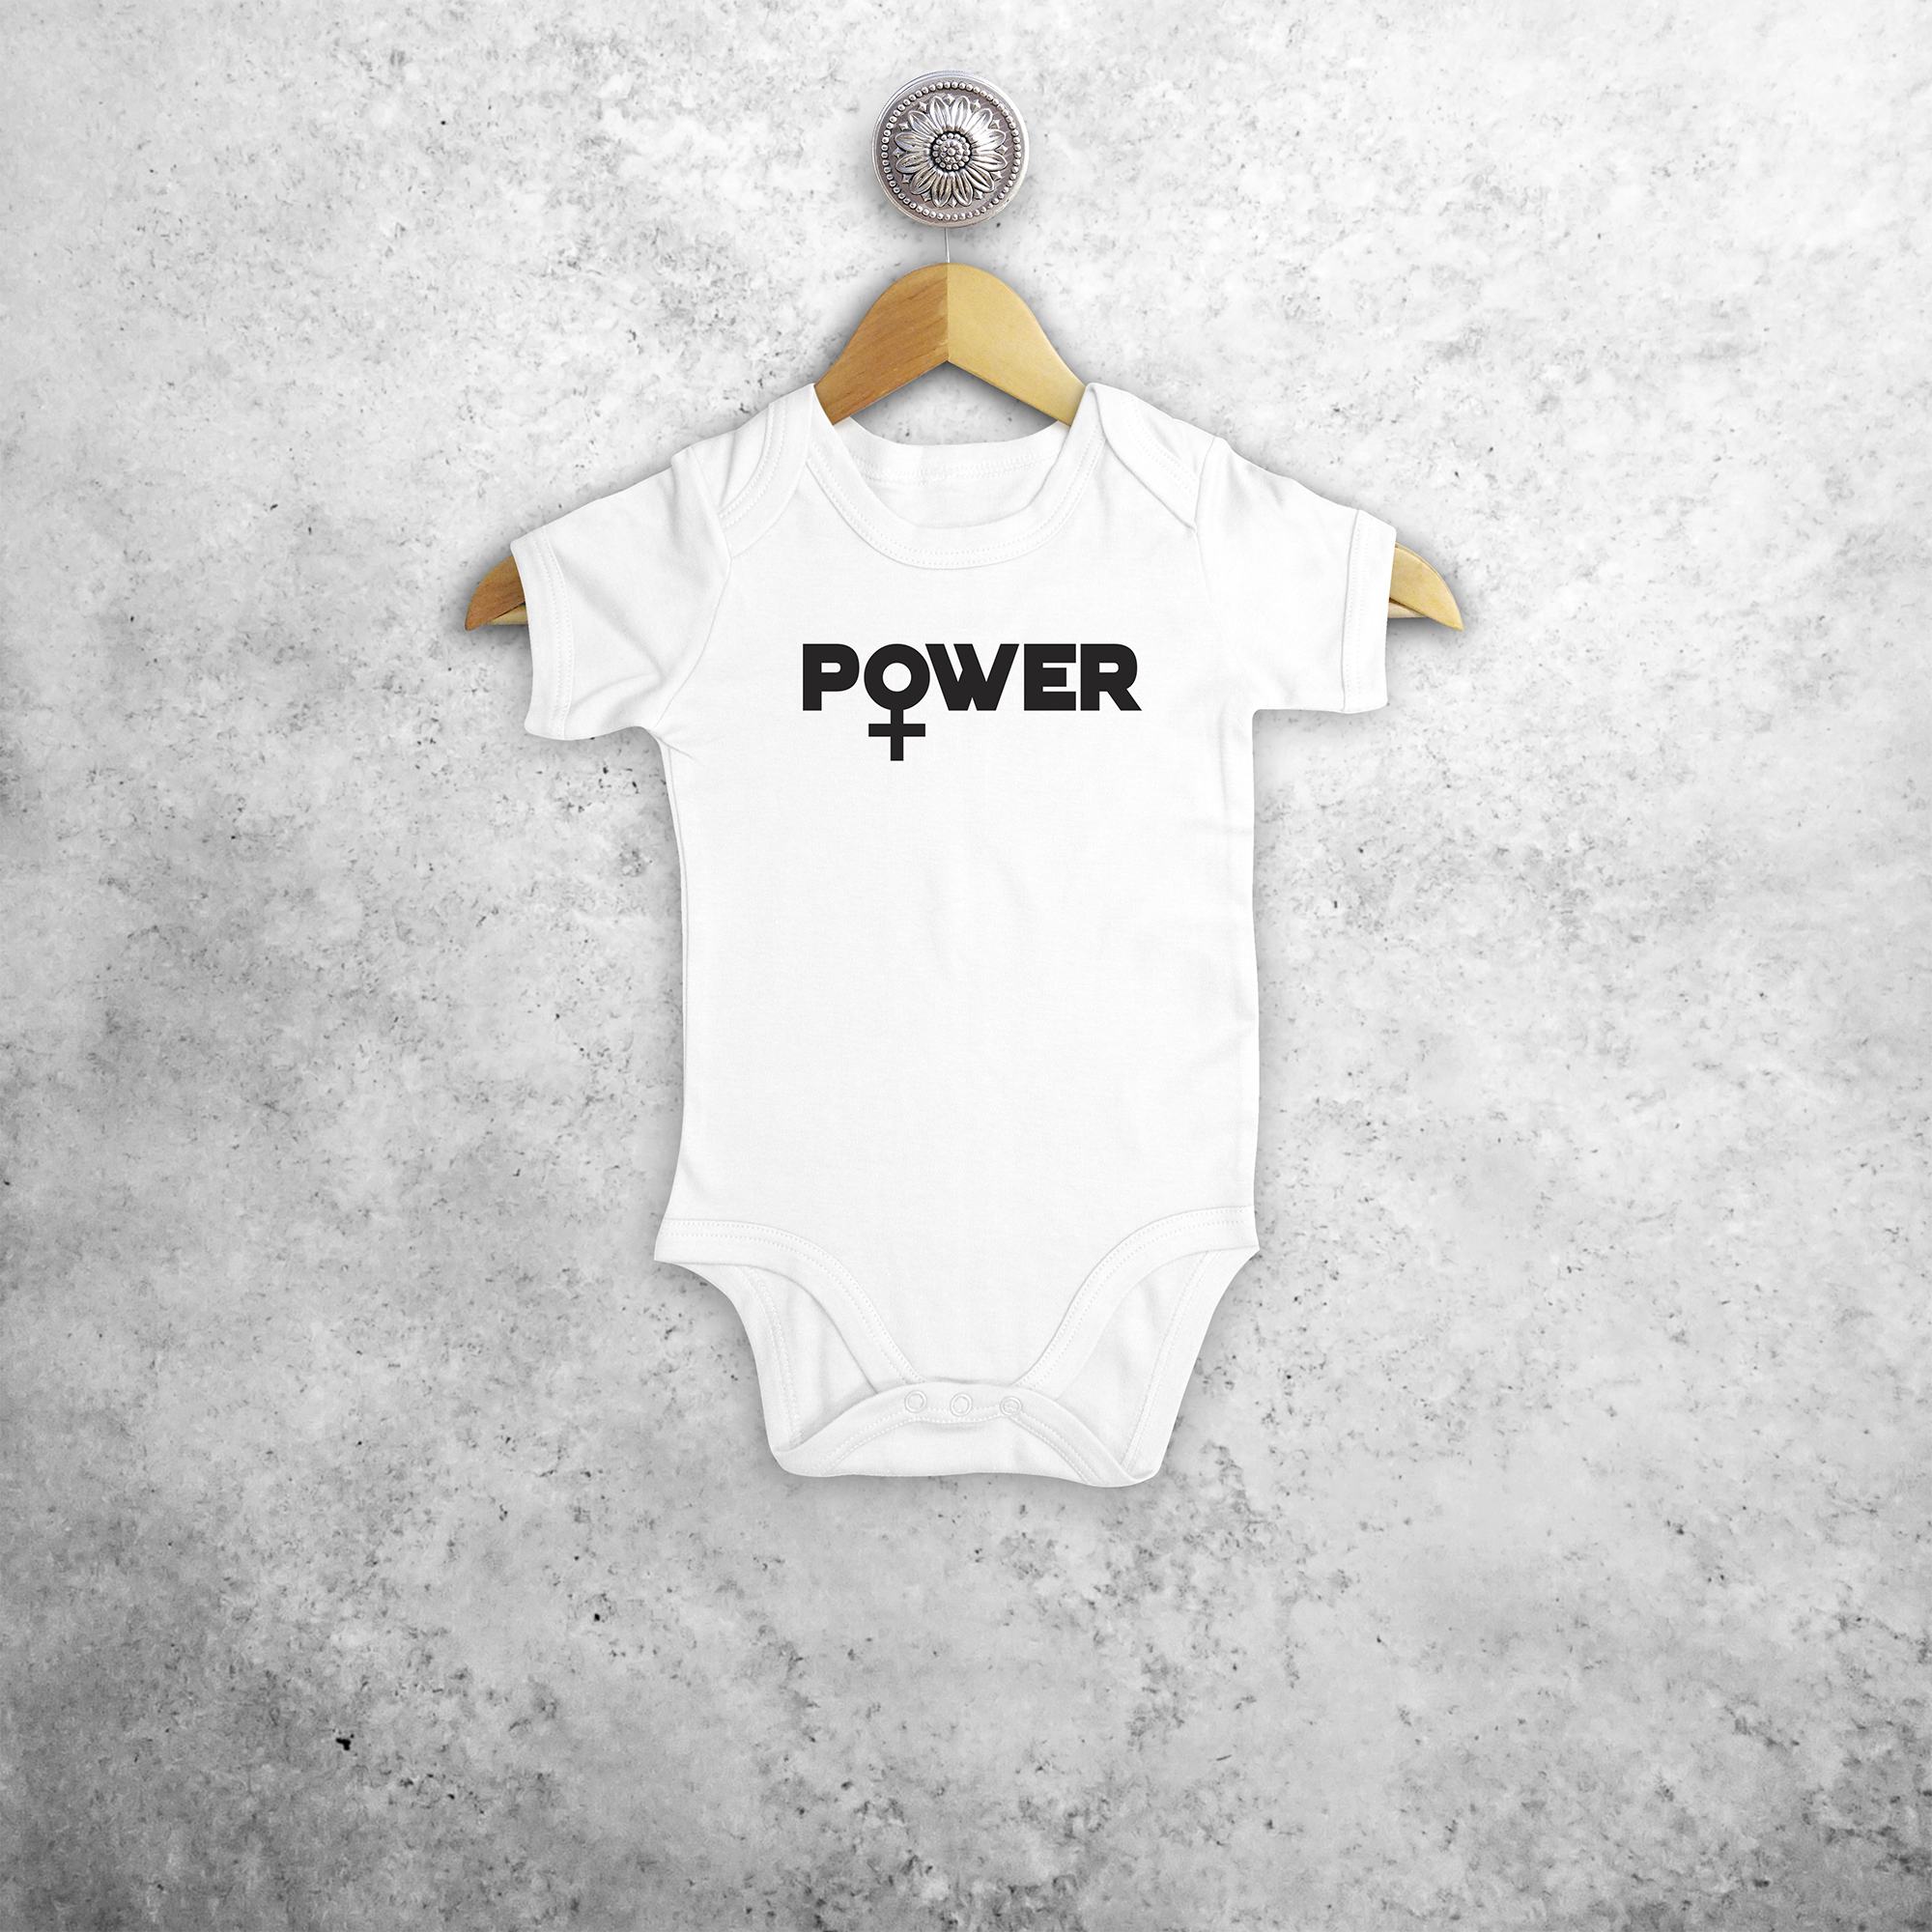 'Power' baby shortsleeve bodysuit